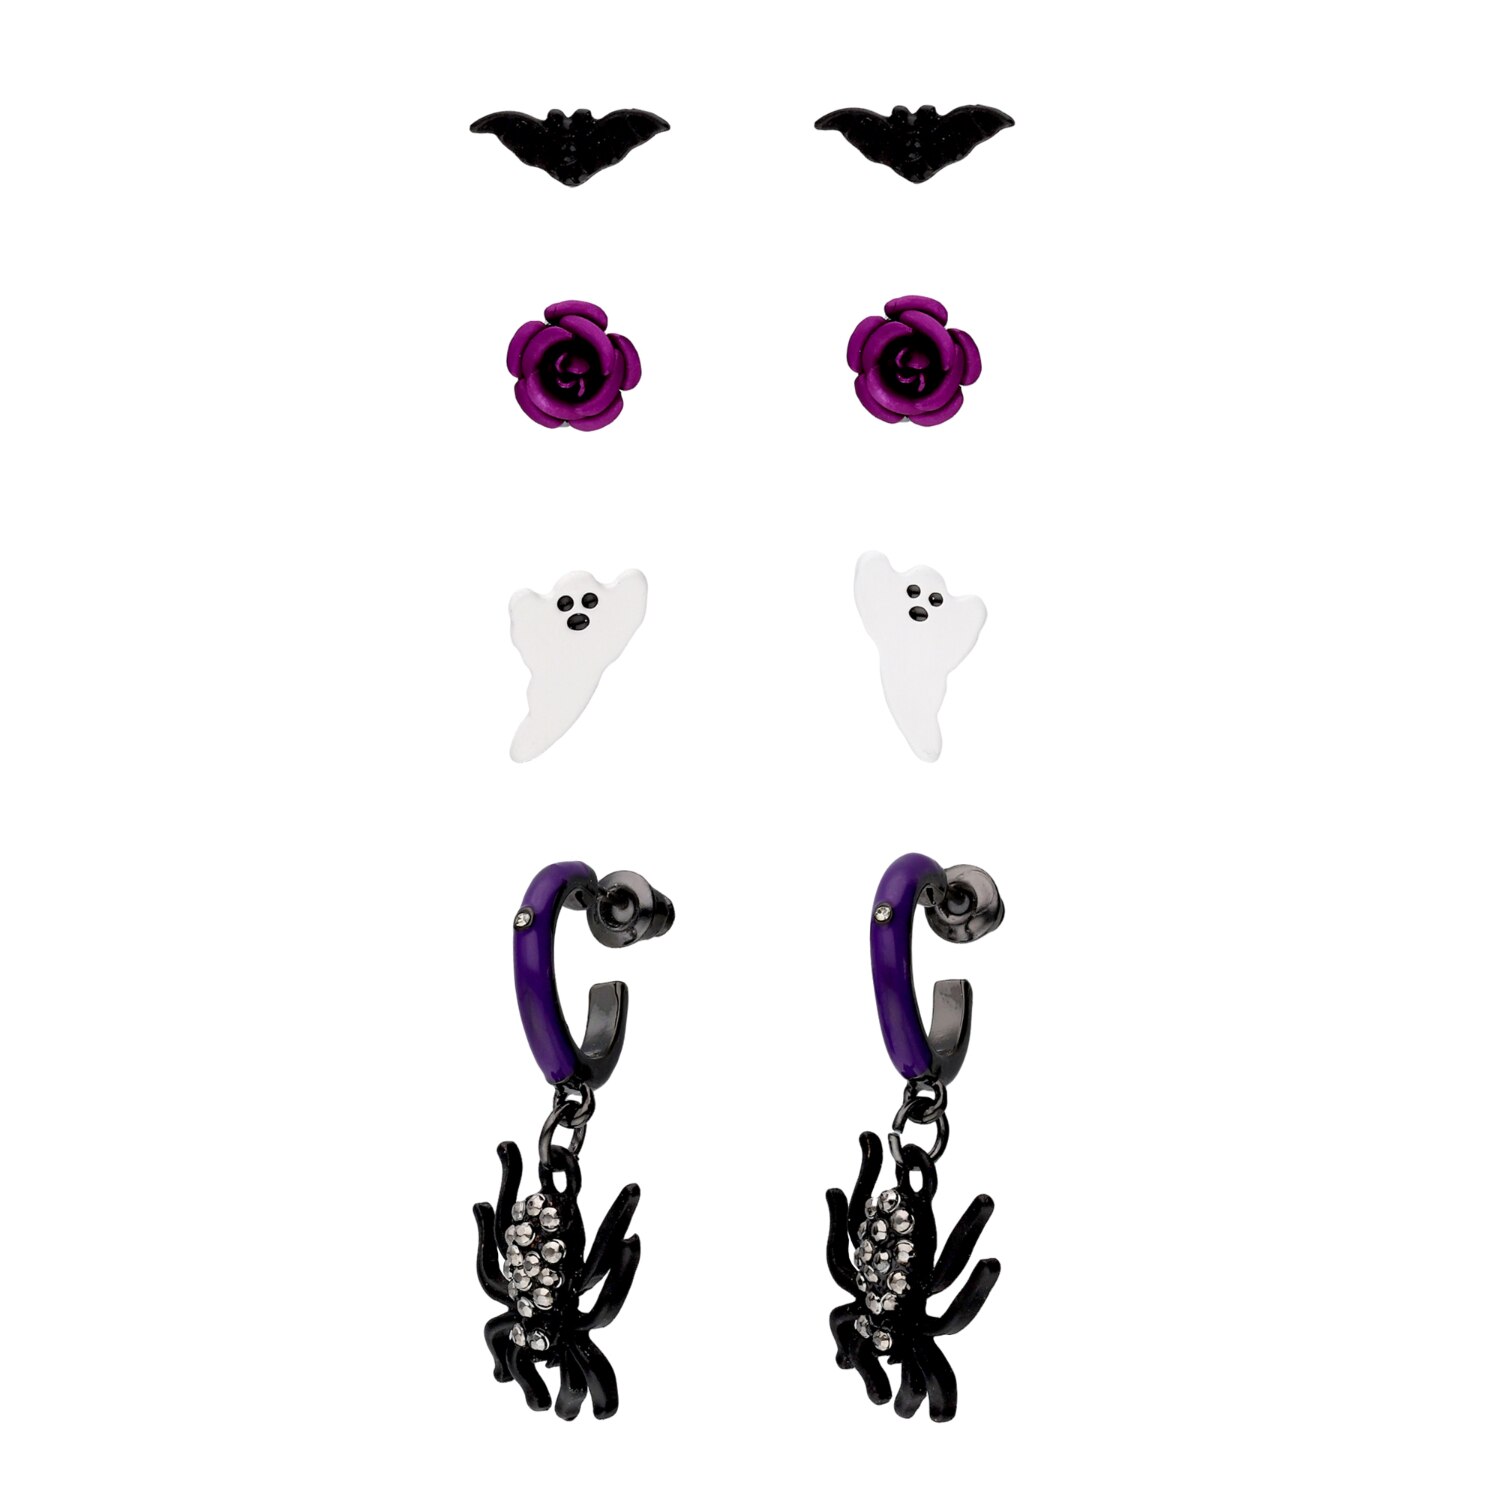 I AM Jewelry Halloween Earring Set, 8CT